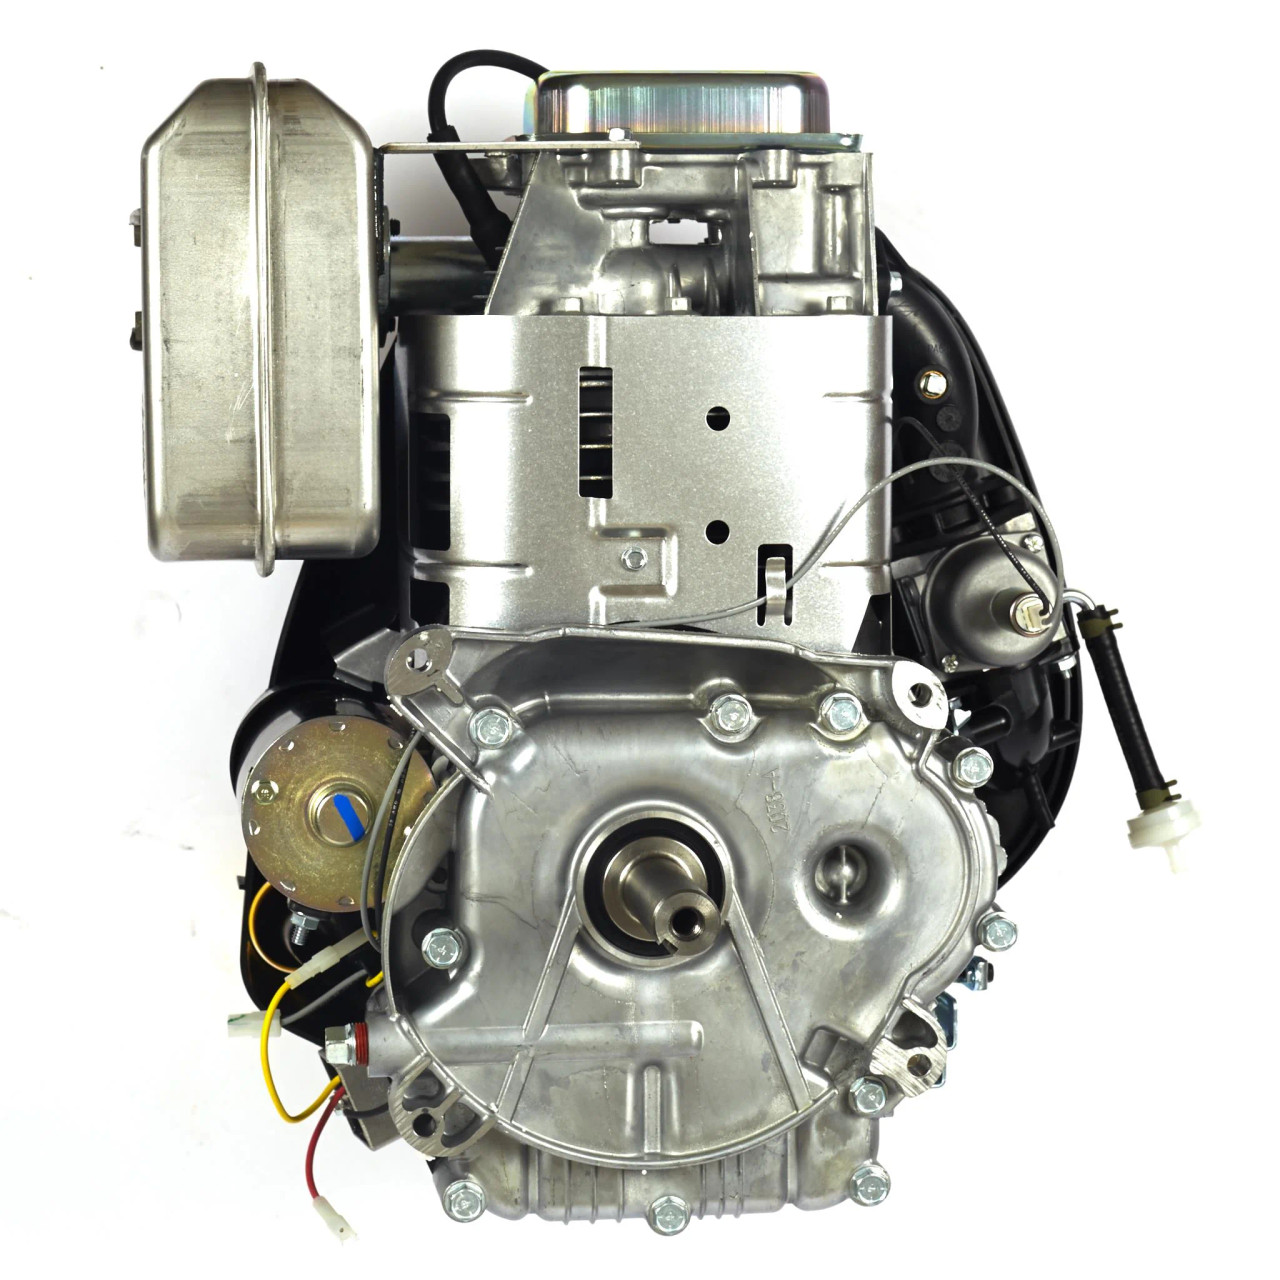 EXi Series 17.5 HP 500cc Vertical Shaft Engine 31R907-0007-G1